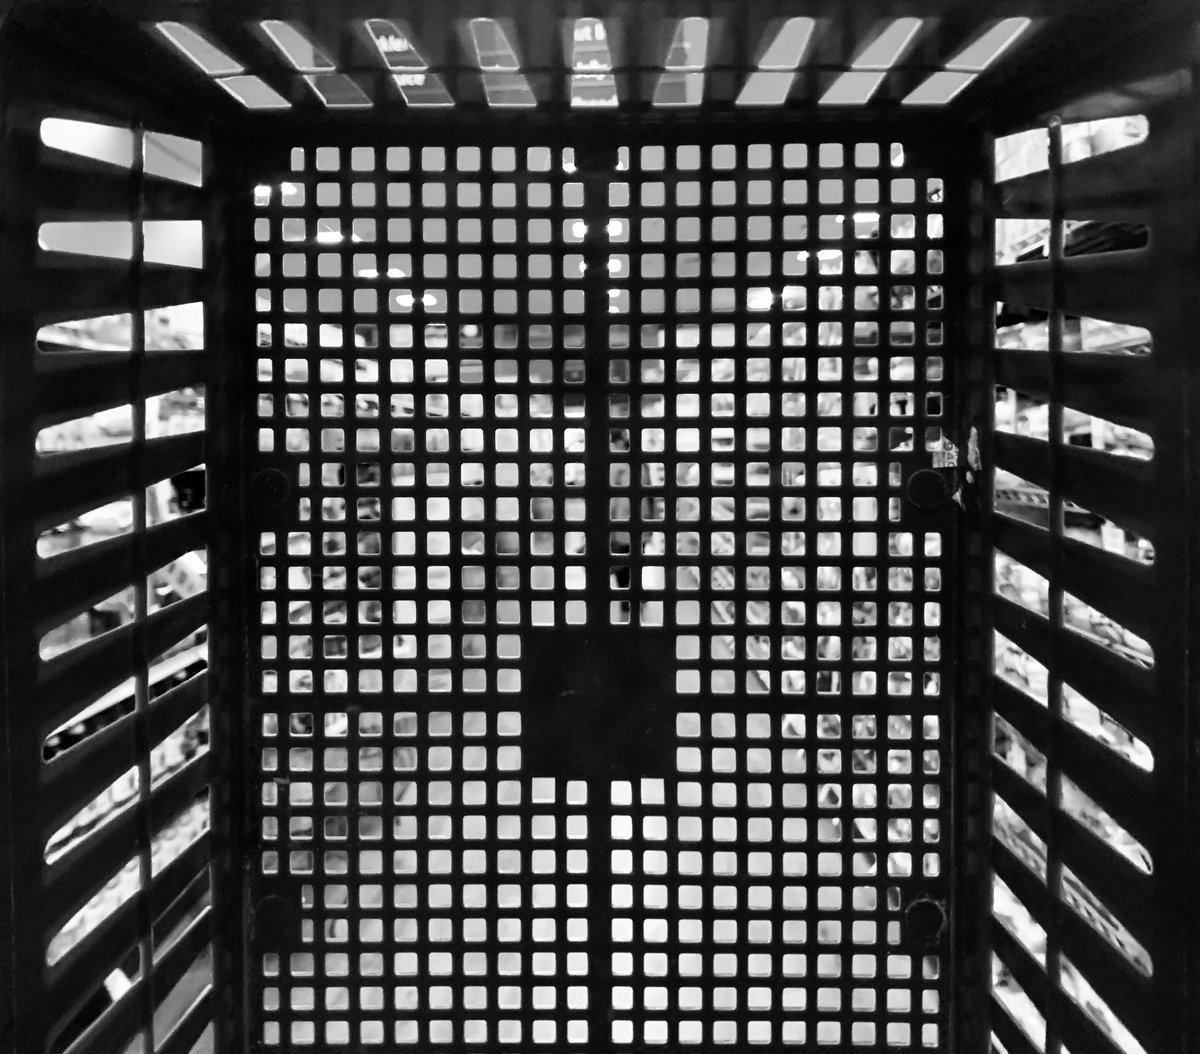 @kc_native_photo Basket Case
“Strange guy in aisle three”

Shopping Basket interior
Haggen’s Market
Bellingham, WA

#abstract #basket
#blackandwhitephotography 
#shotoniphone #photography
#abstractphotography